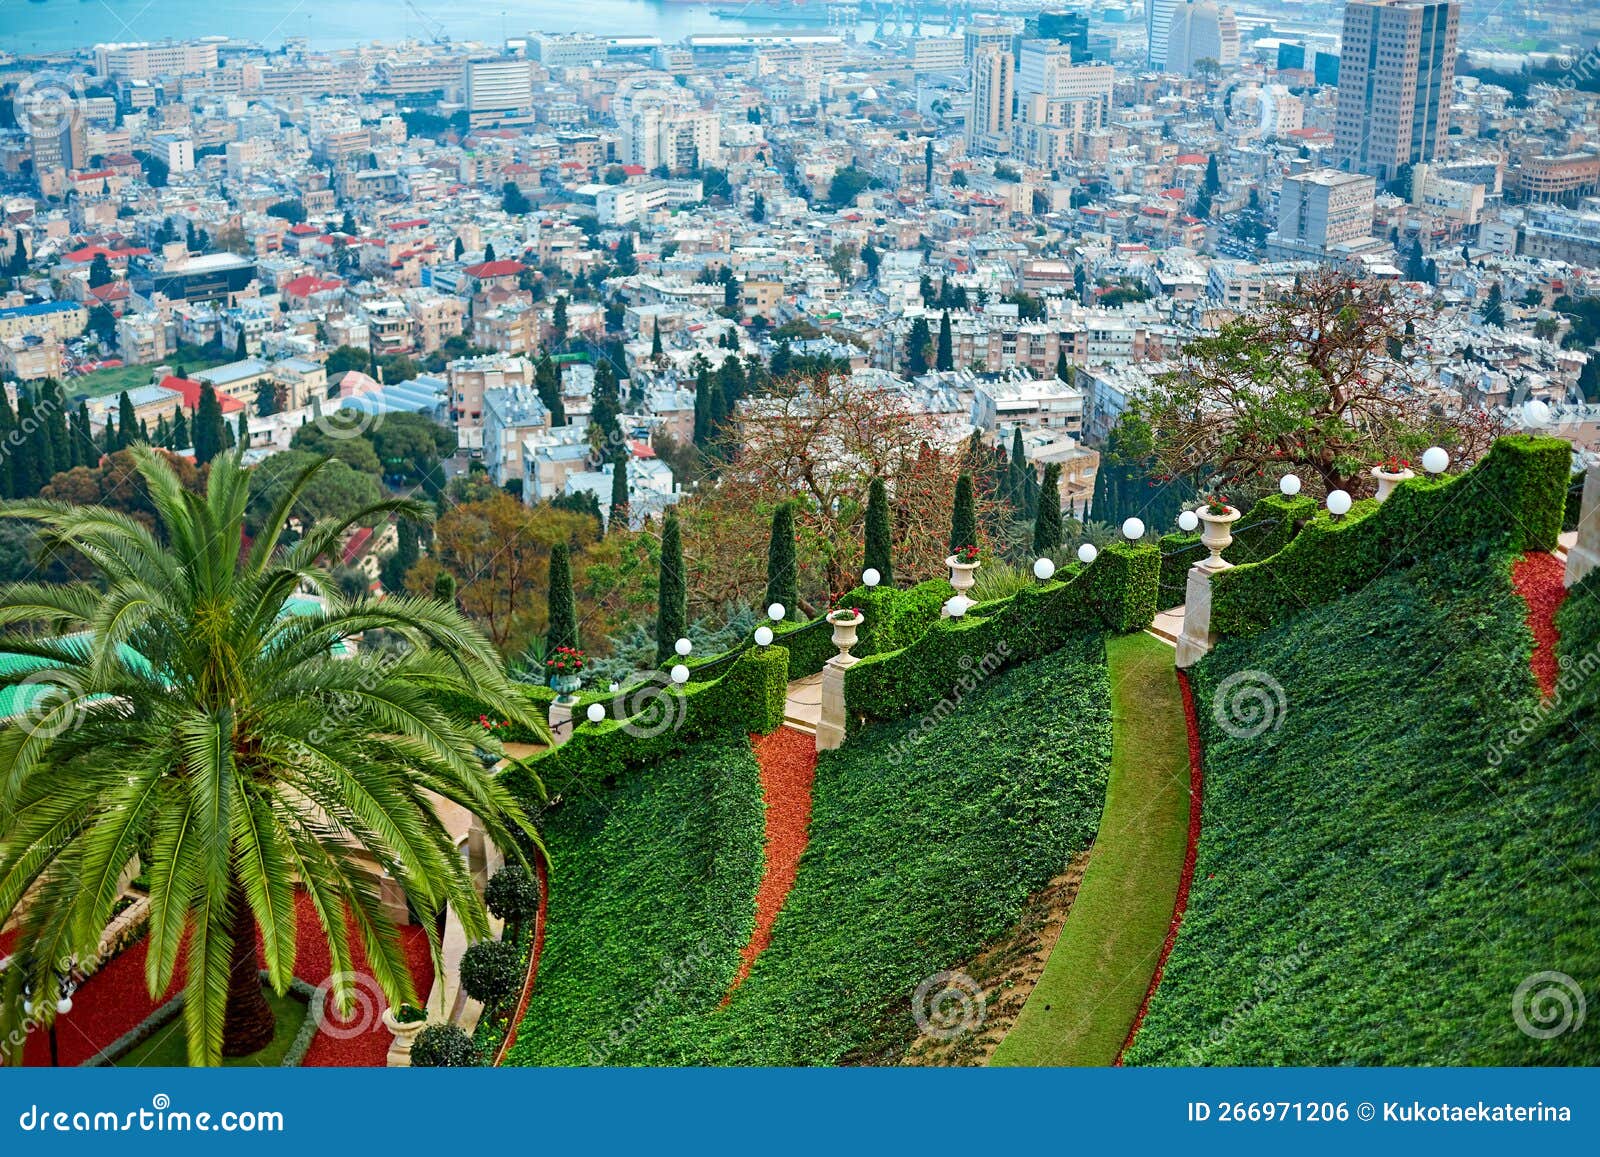 baha`i gardens, also the terraces of the baha`i faith, the hanging gardens of haifa